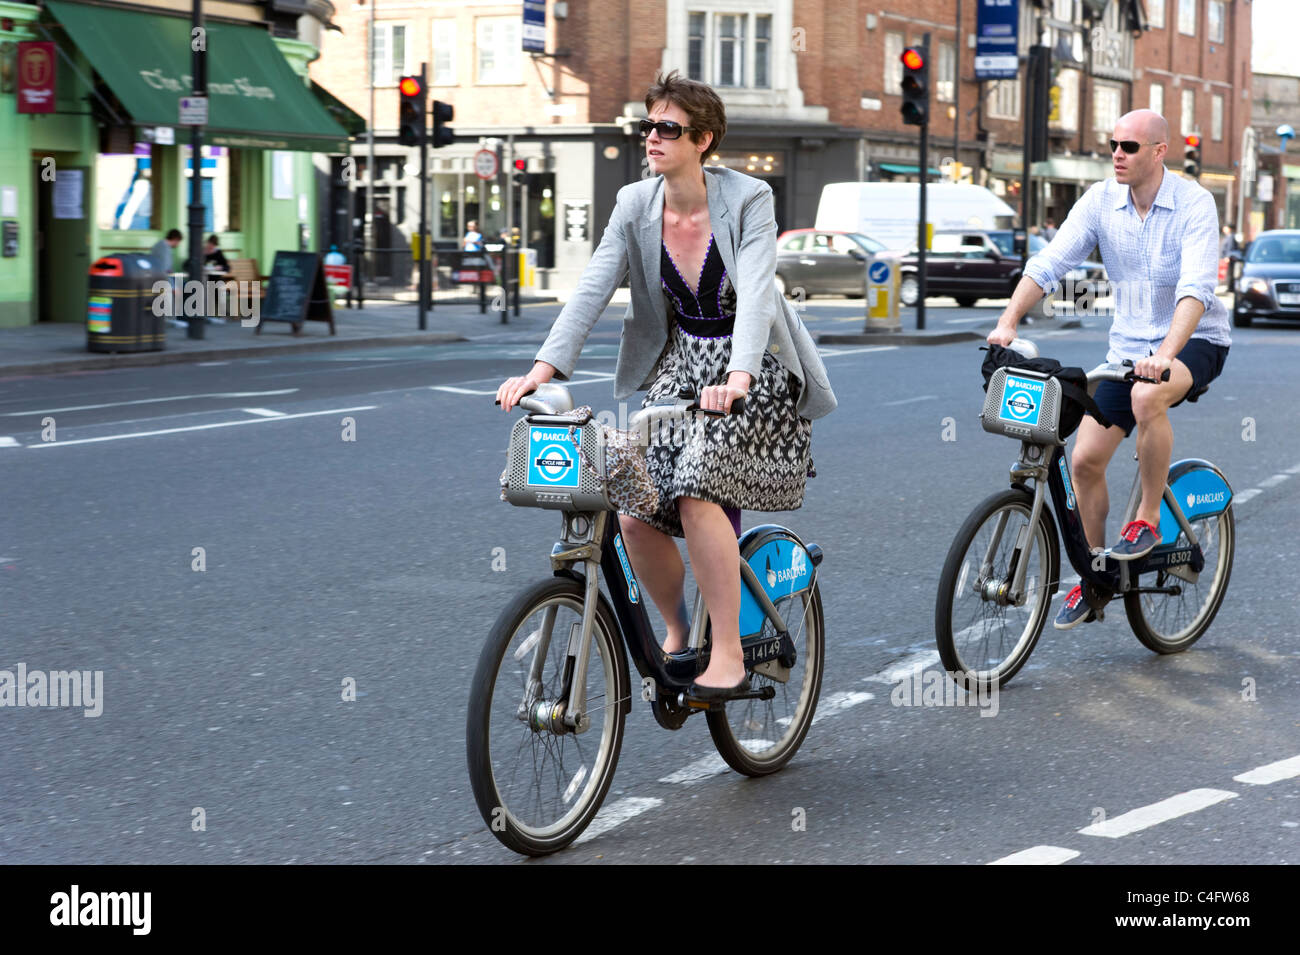 Barclays cycle hire scheme, London, UK Stock Photo